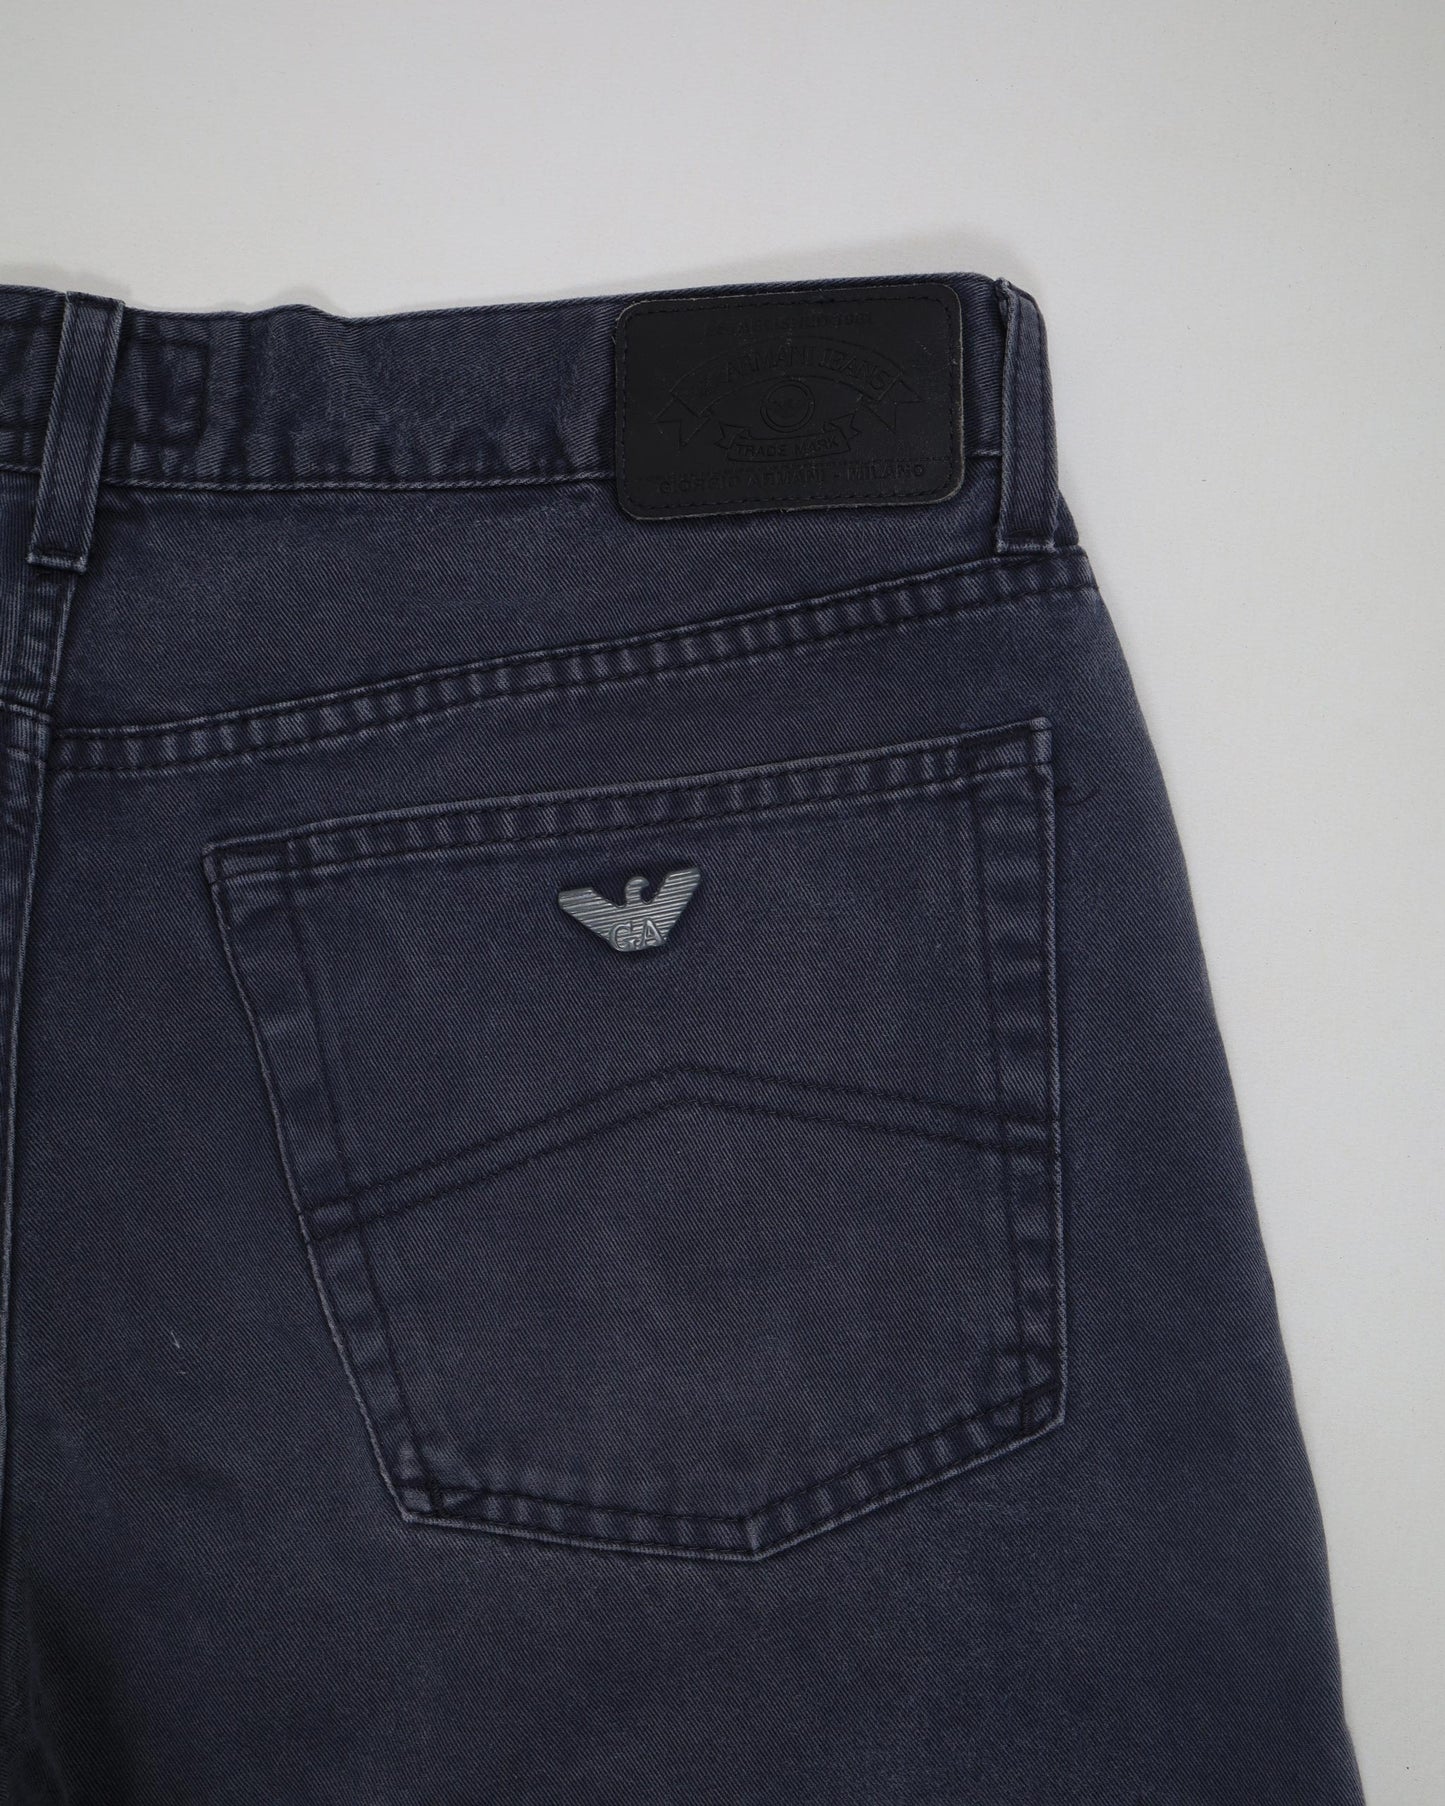 Vintage Armani Jeans Shorts